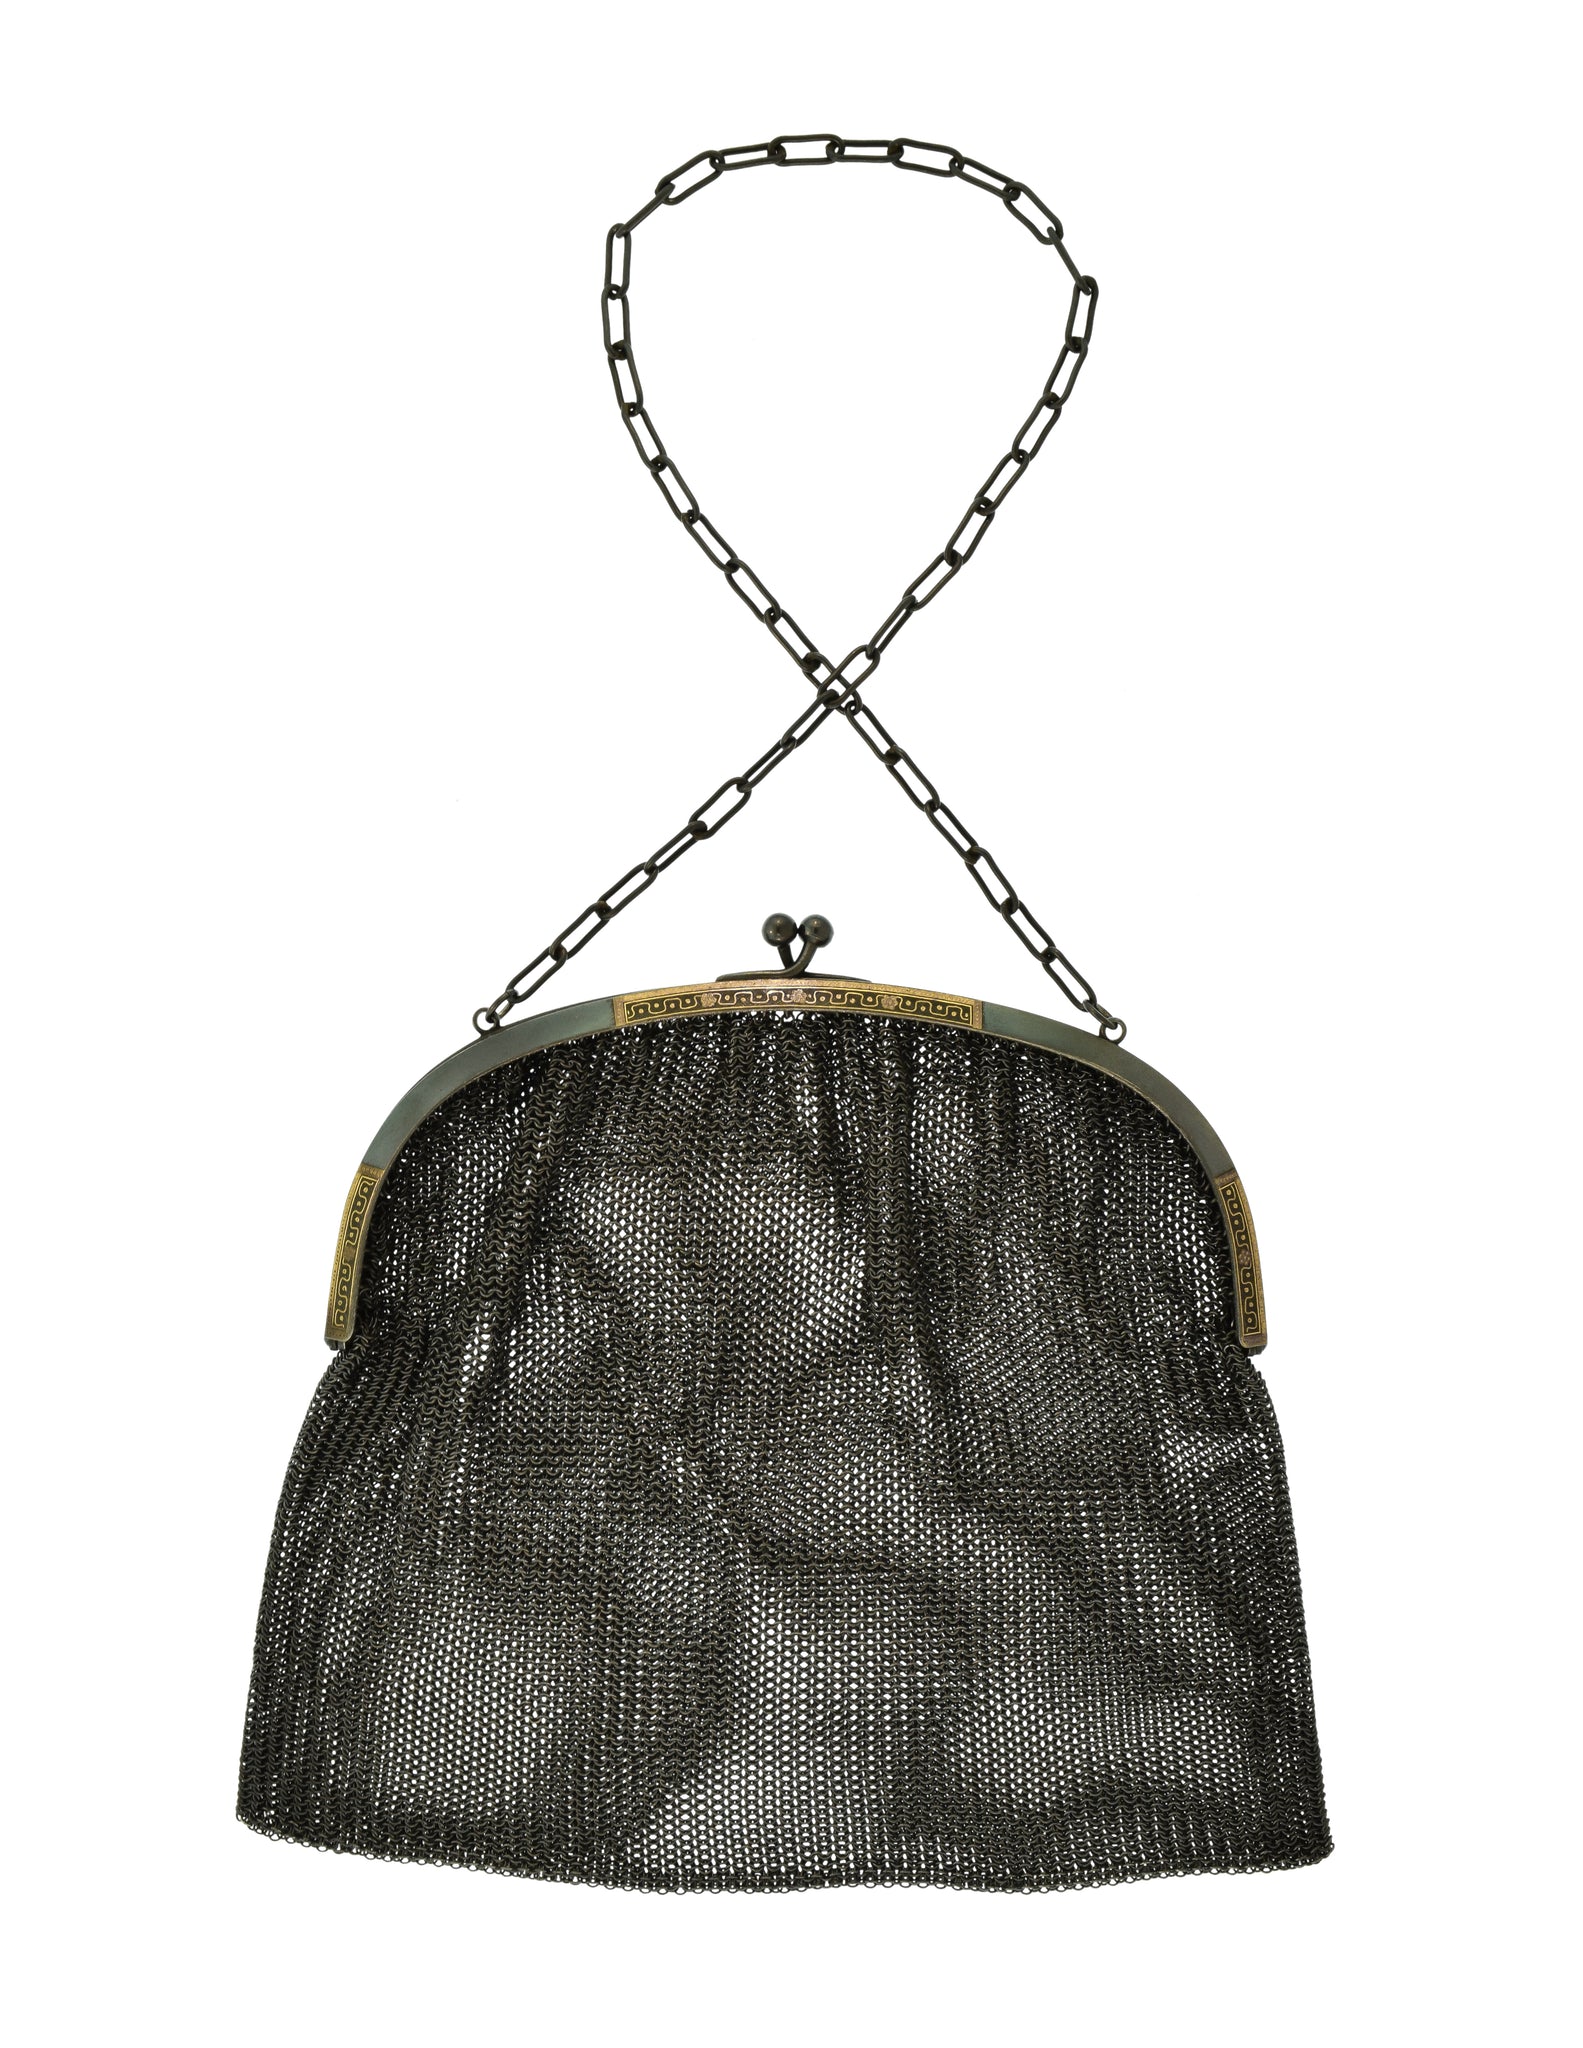 Vintage 1930s Blackened Charcoal Grey Chainmail Metal Mesh Gold Embossed Kiss Lock Handbag